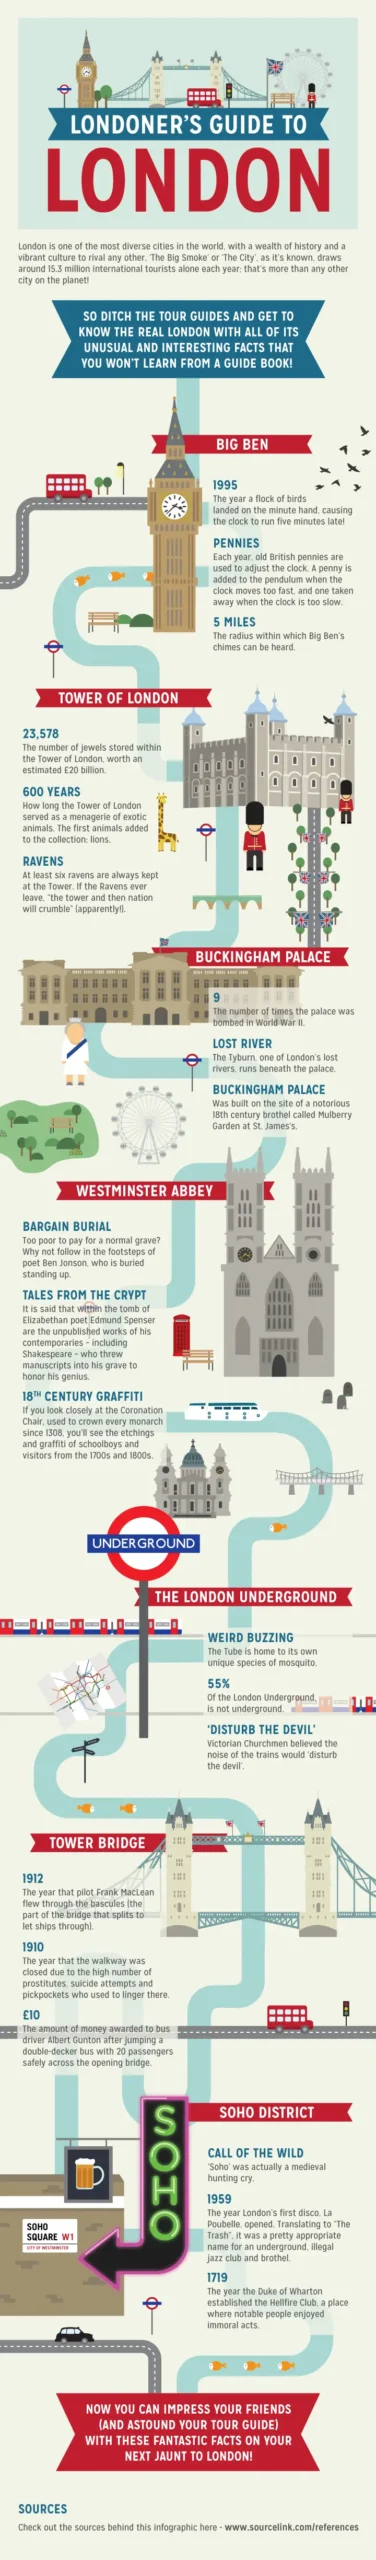 Facts On Londoner’s Guide Timeline
